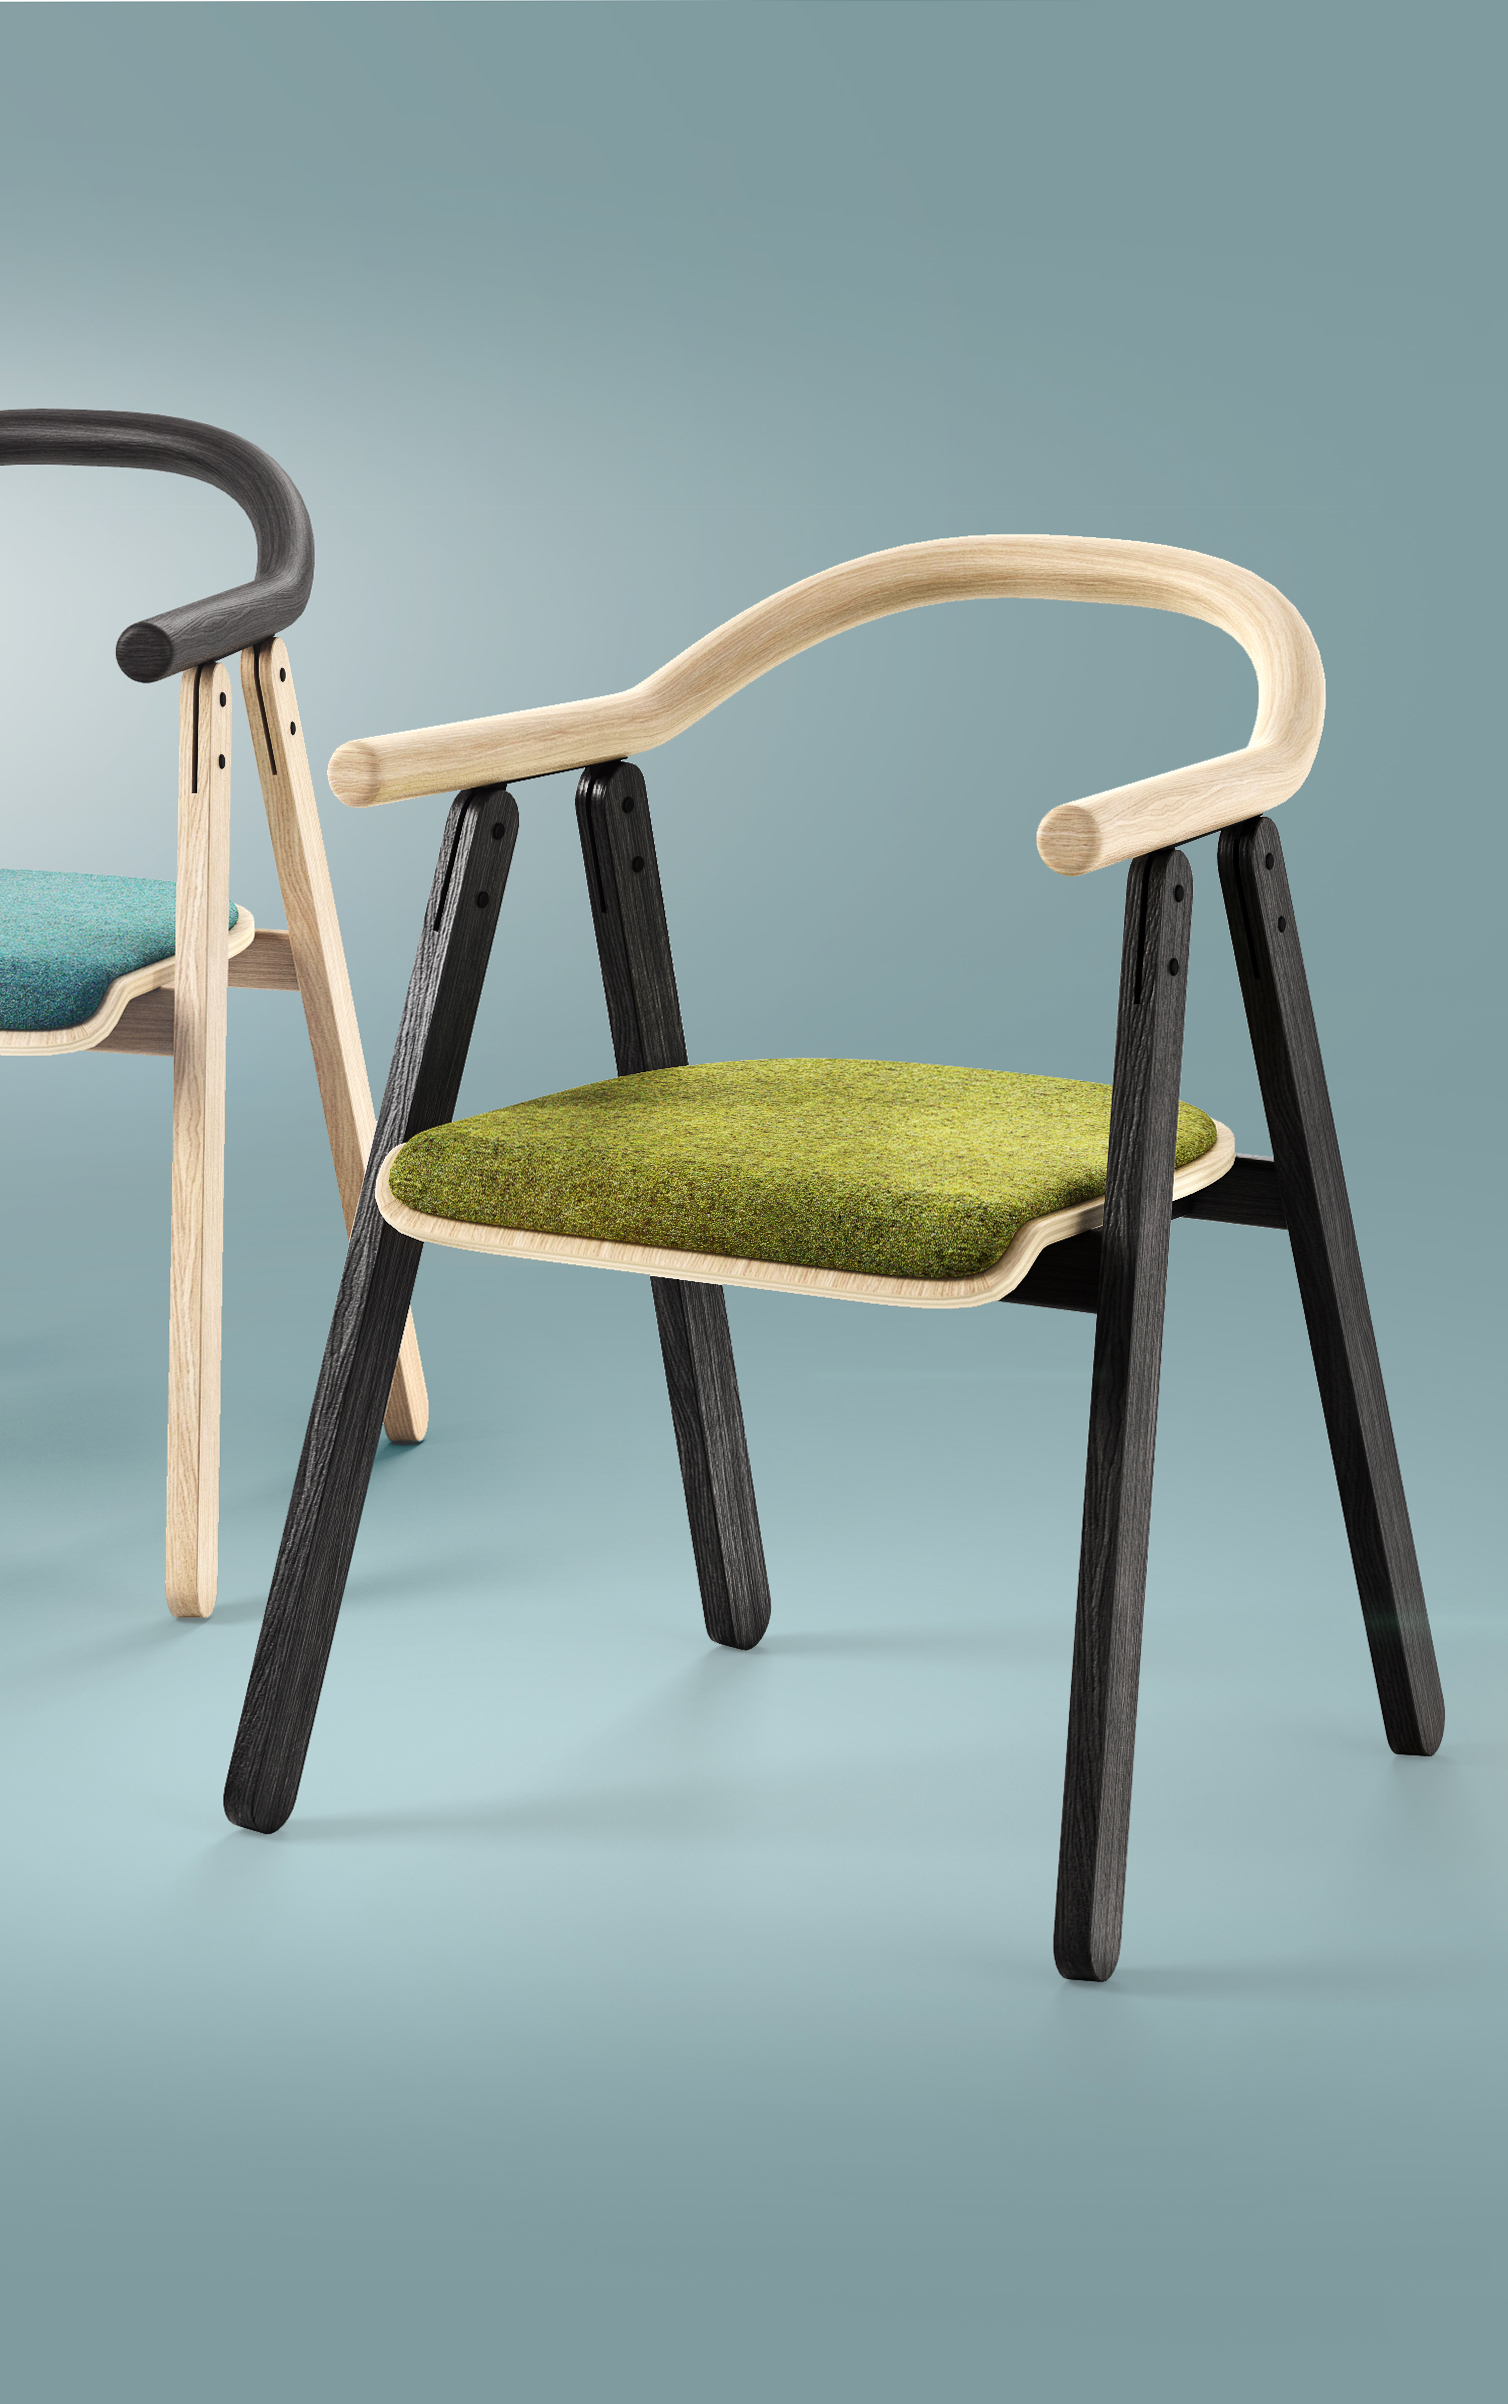 TOON Chair by Radek Nowakowski for Redo Design Studio